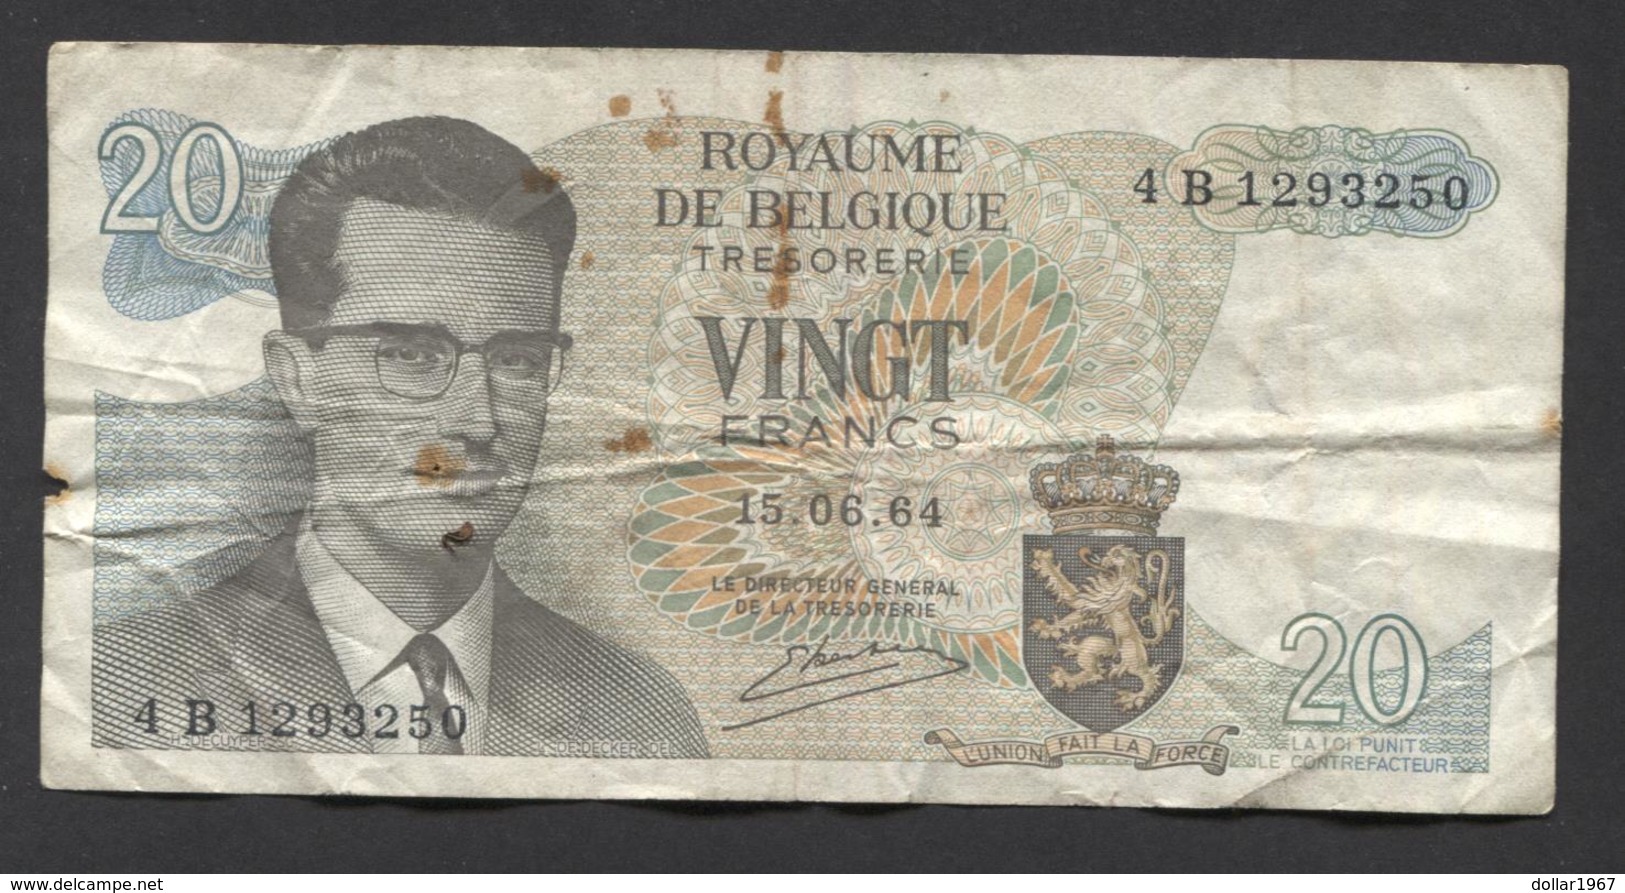 België Belgique Belgium 15 06 1964 -  20 Francs Atomium Baudouin. 4 B 1293250 - 20 Franchi